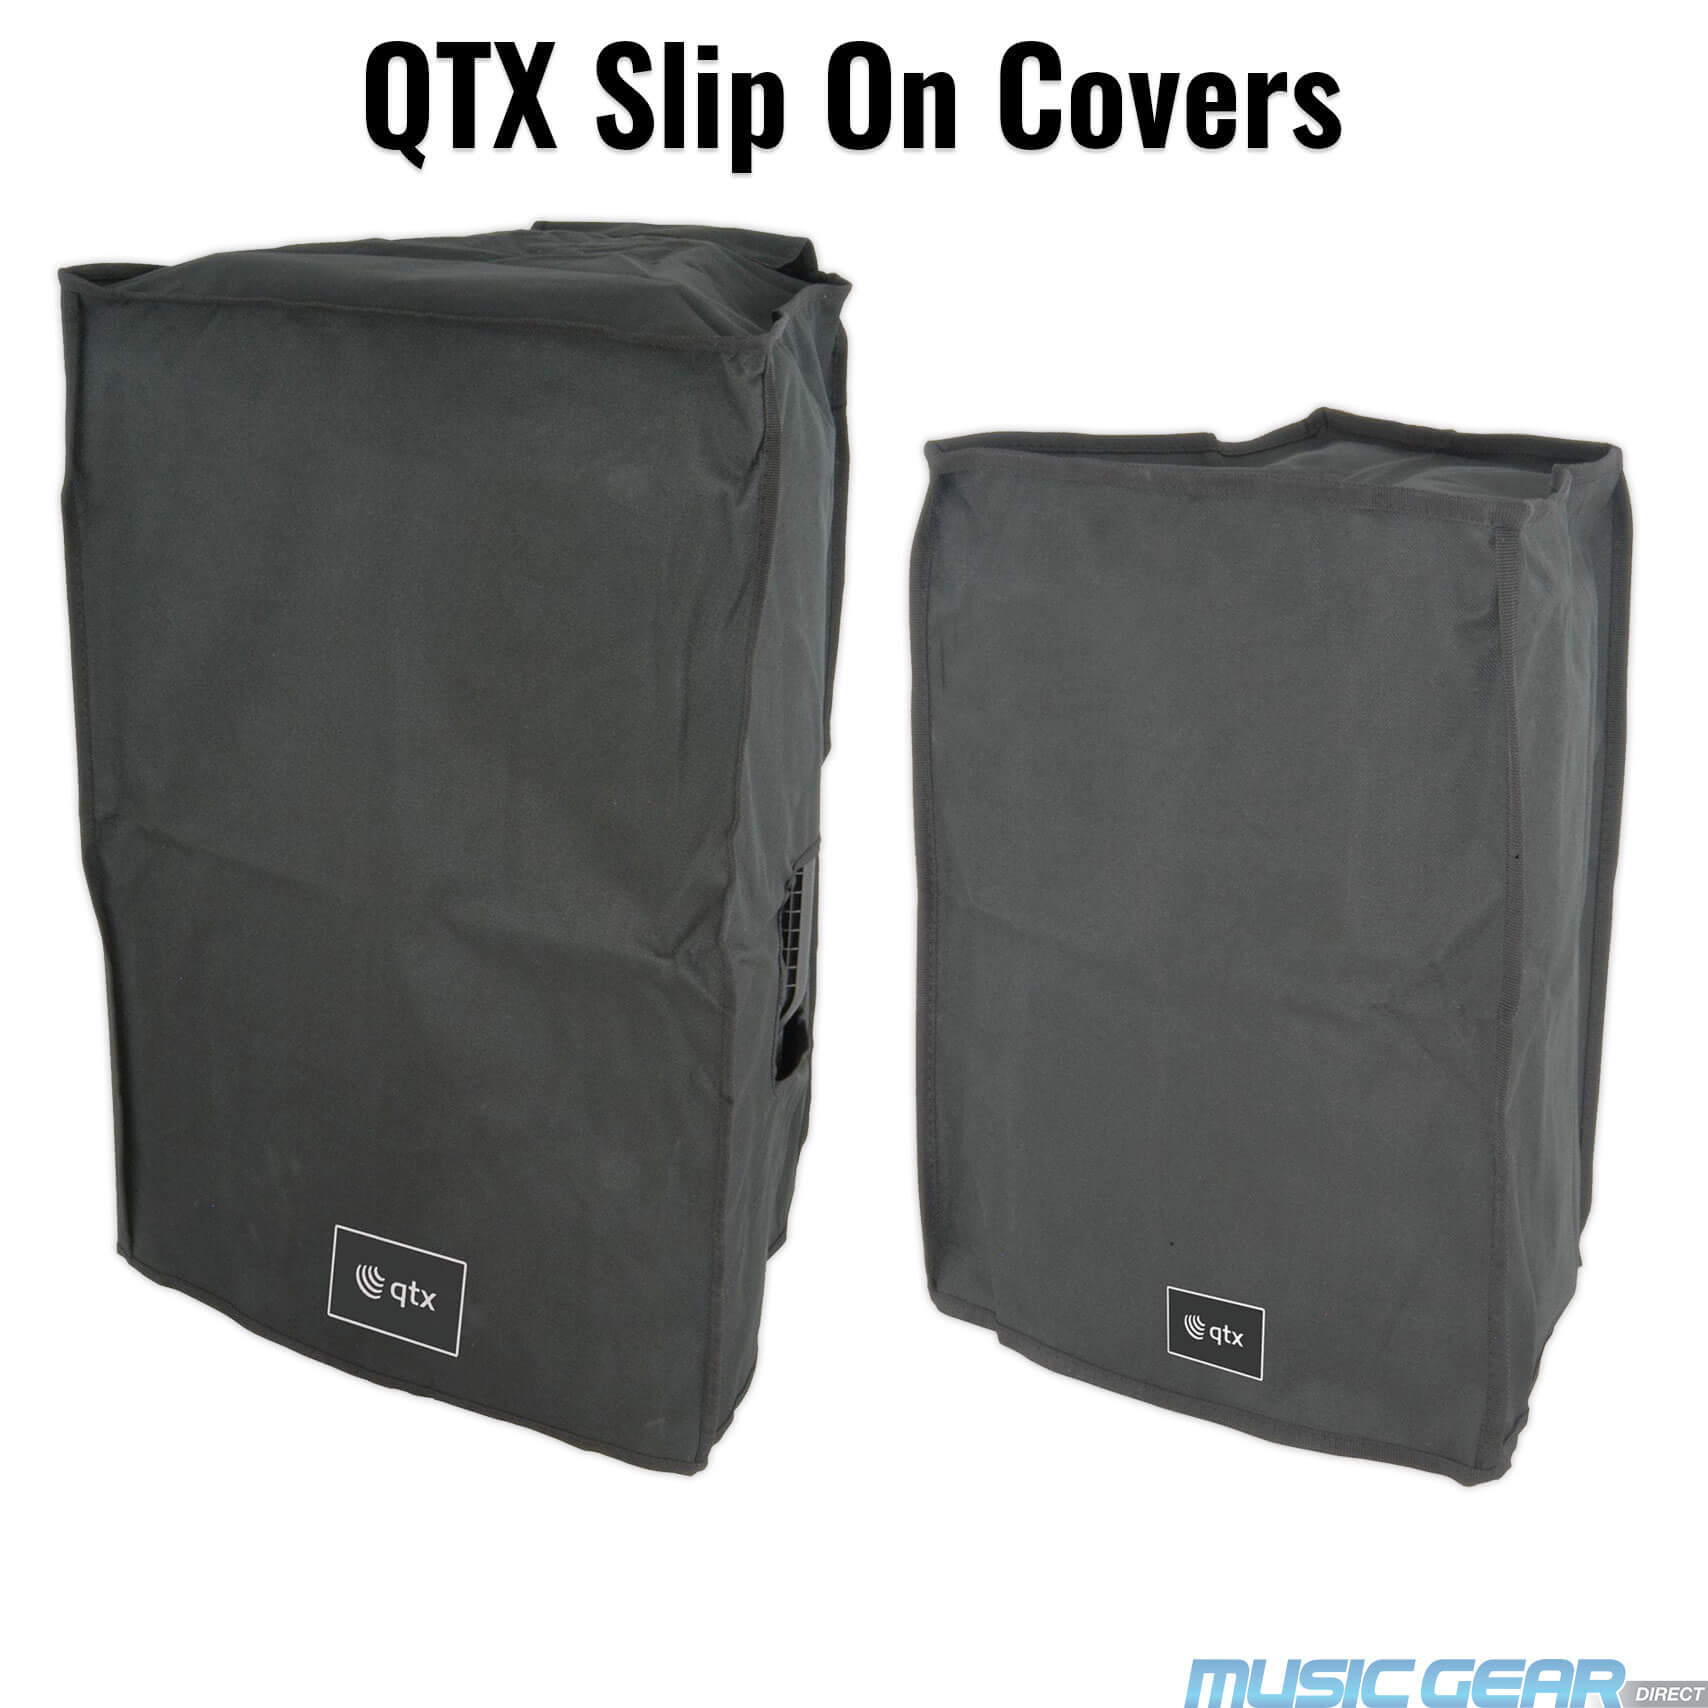 QTX Slip On Covers